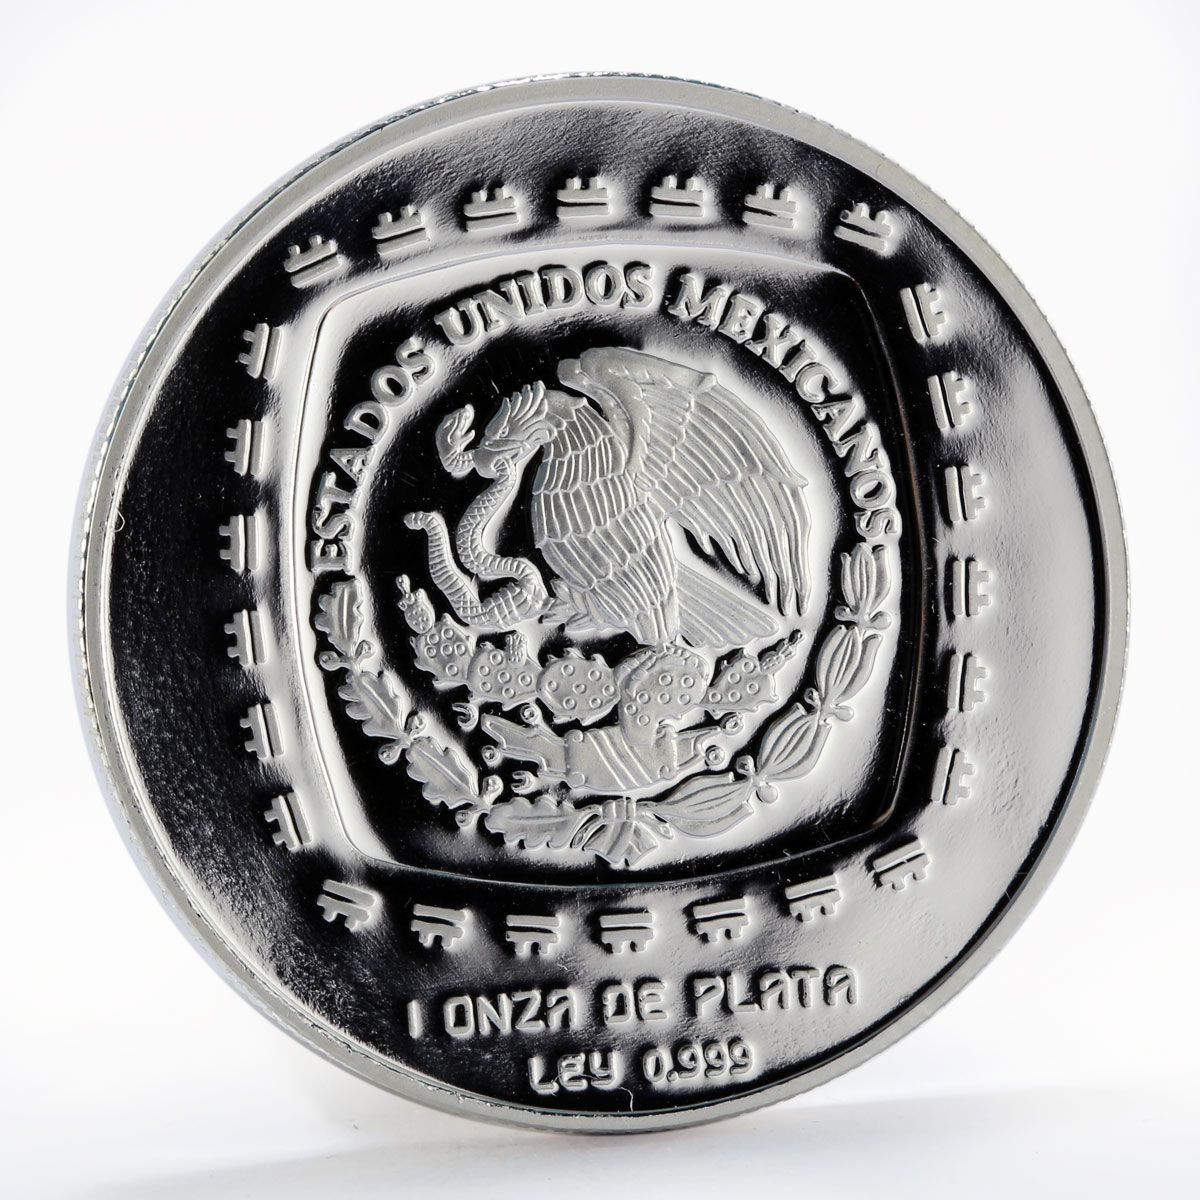 Mexico 5 pesos Statue Hacha Ceremonial proof silver coin 1996